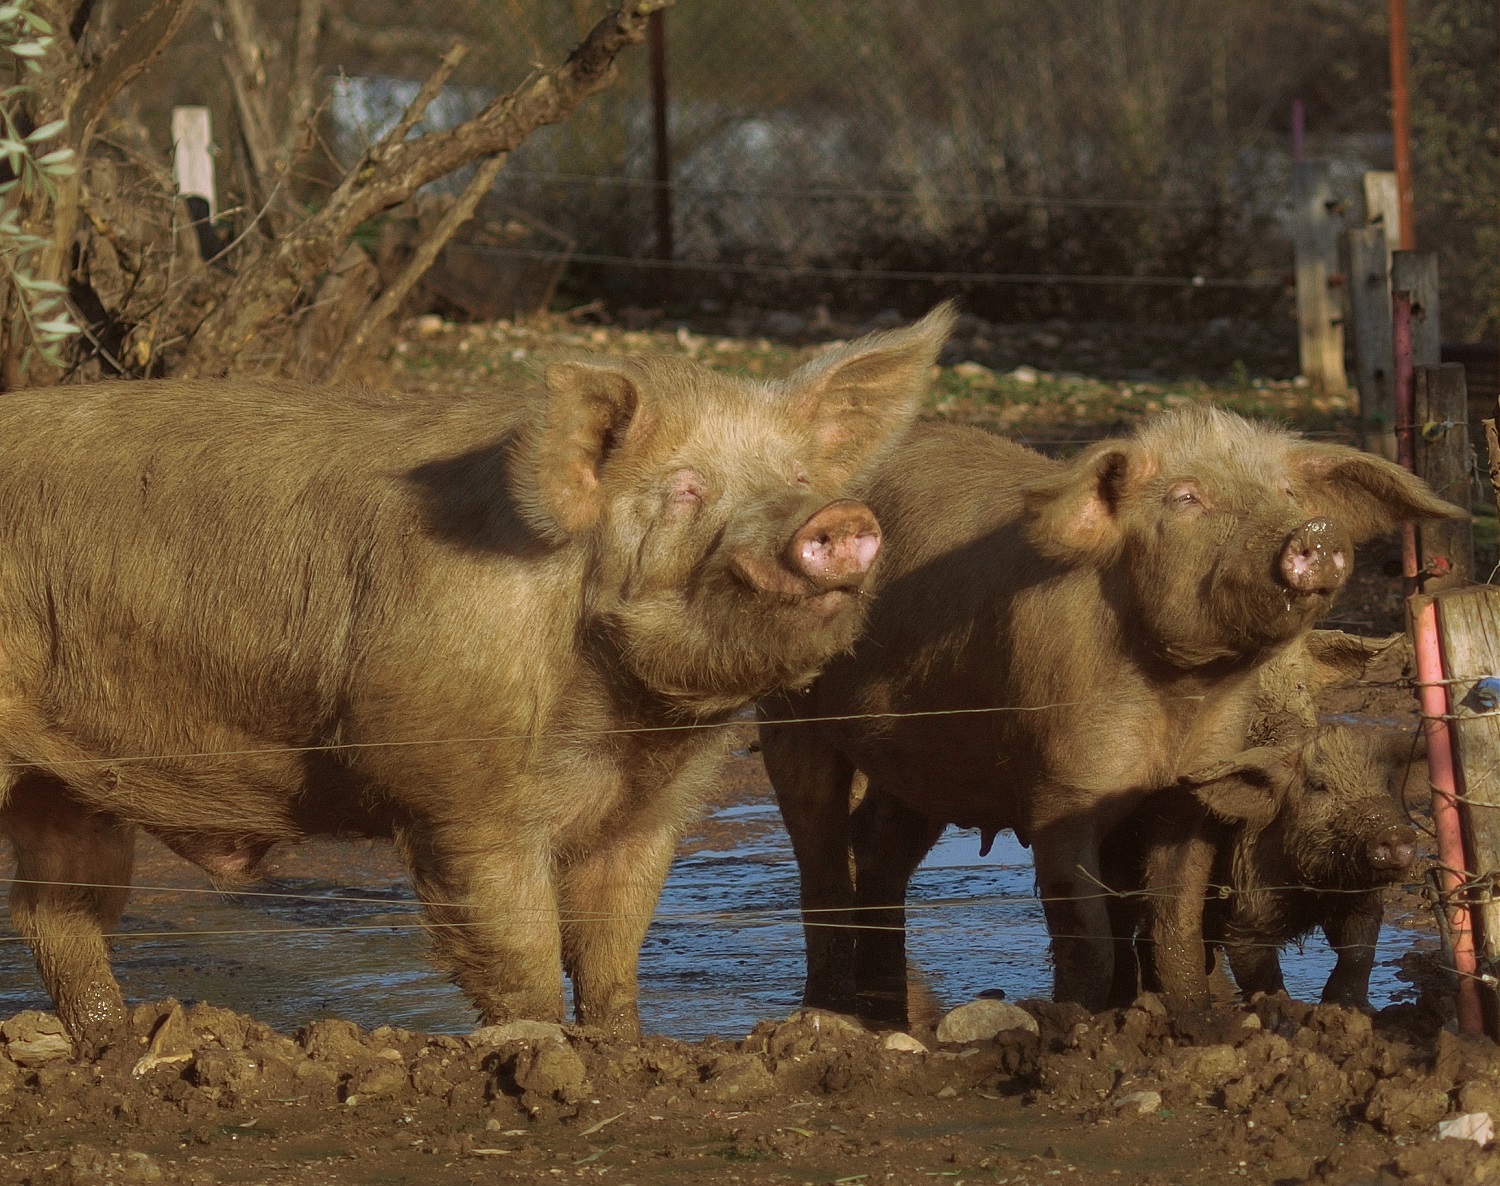 pigs farm